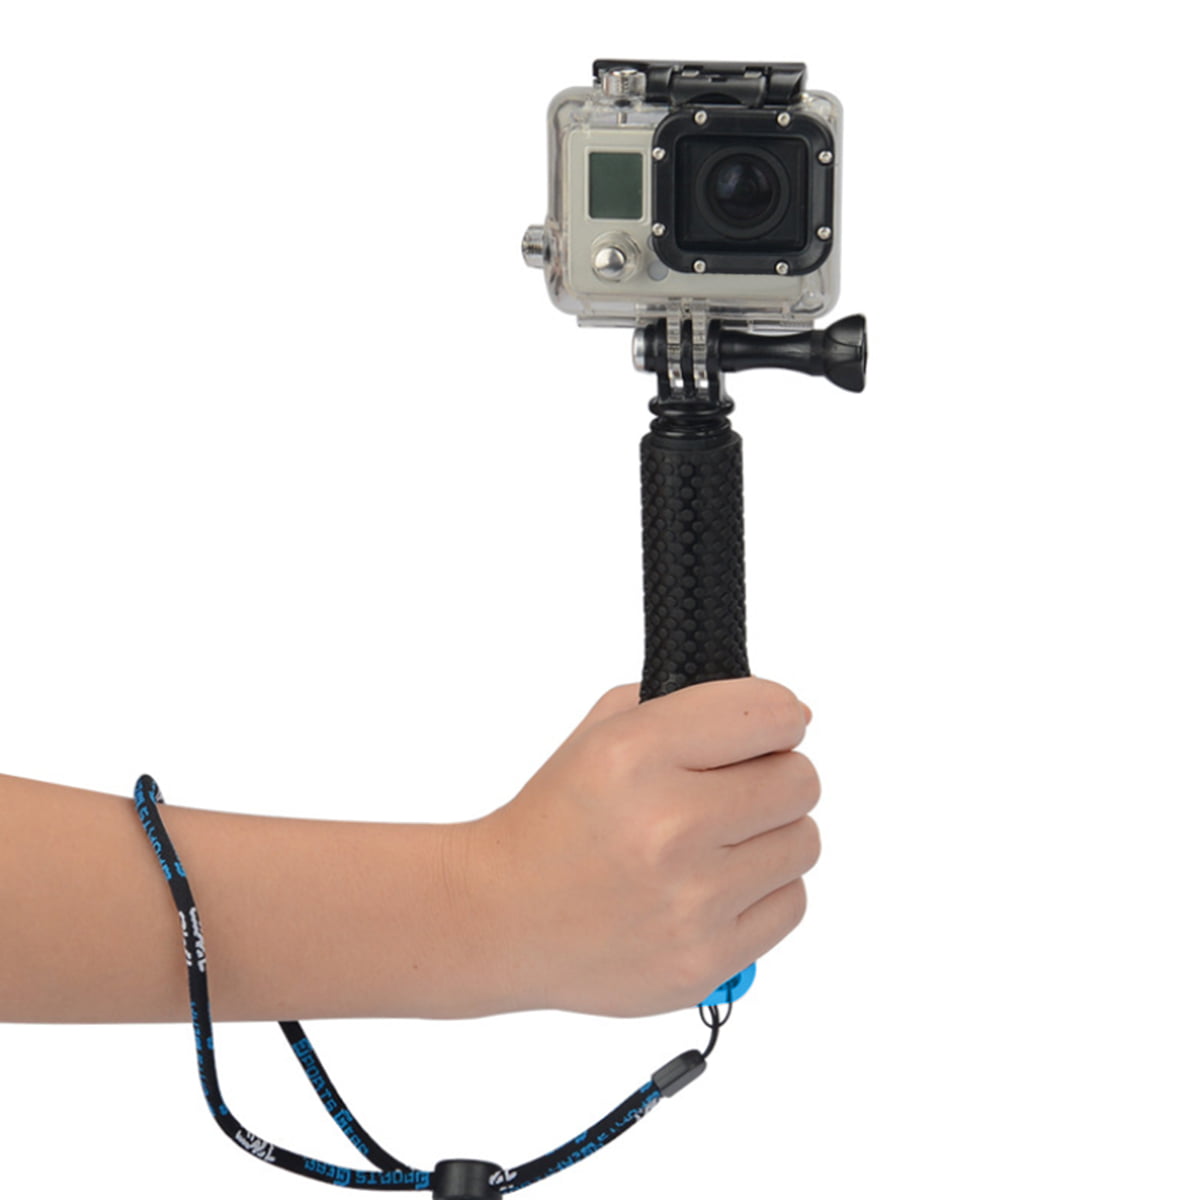 2018 Blue Houkr 19 Waterproof Hand Grip Adjustable Extension Selfie Stick Handheld Monopod Compatible GoPro Hero SJCAM SJ4000 SJ5000 Xiaomi Yi More Action Cameras AKASO 6 5 4 3+ 3 2 1